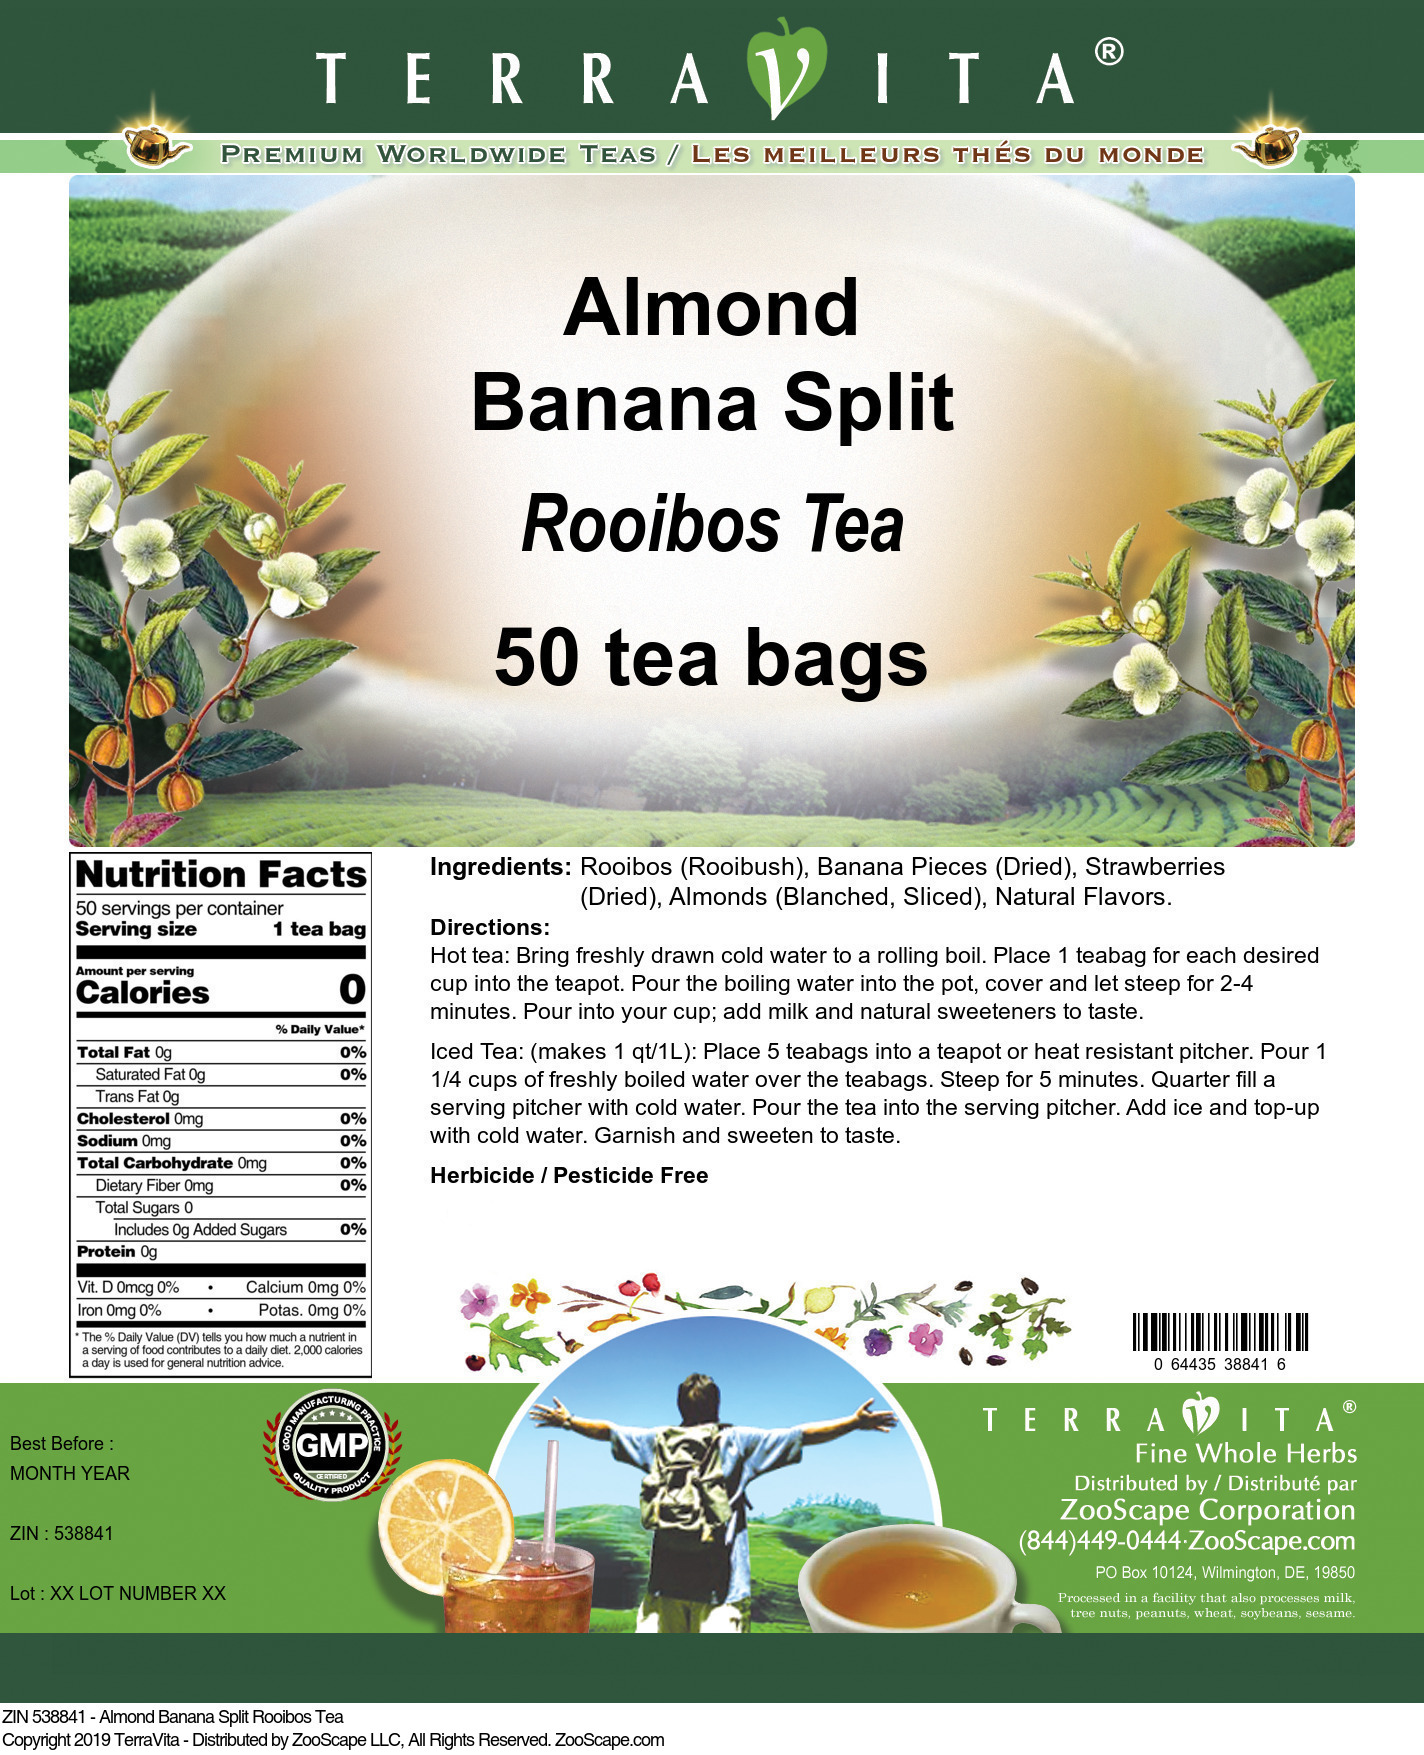 Almond Banana Split Rooibos Tea - Label